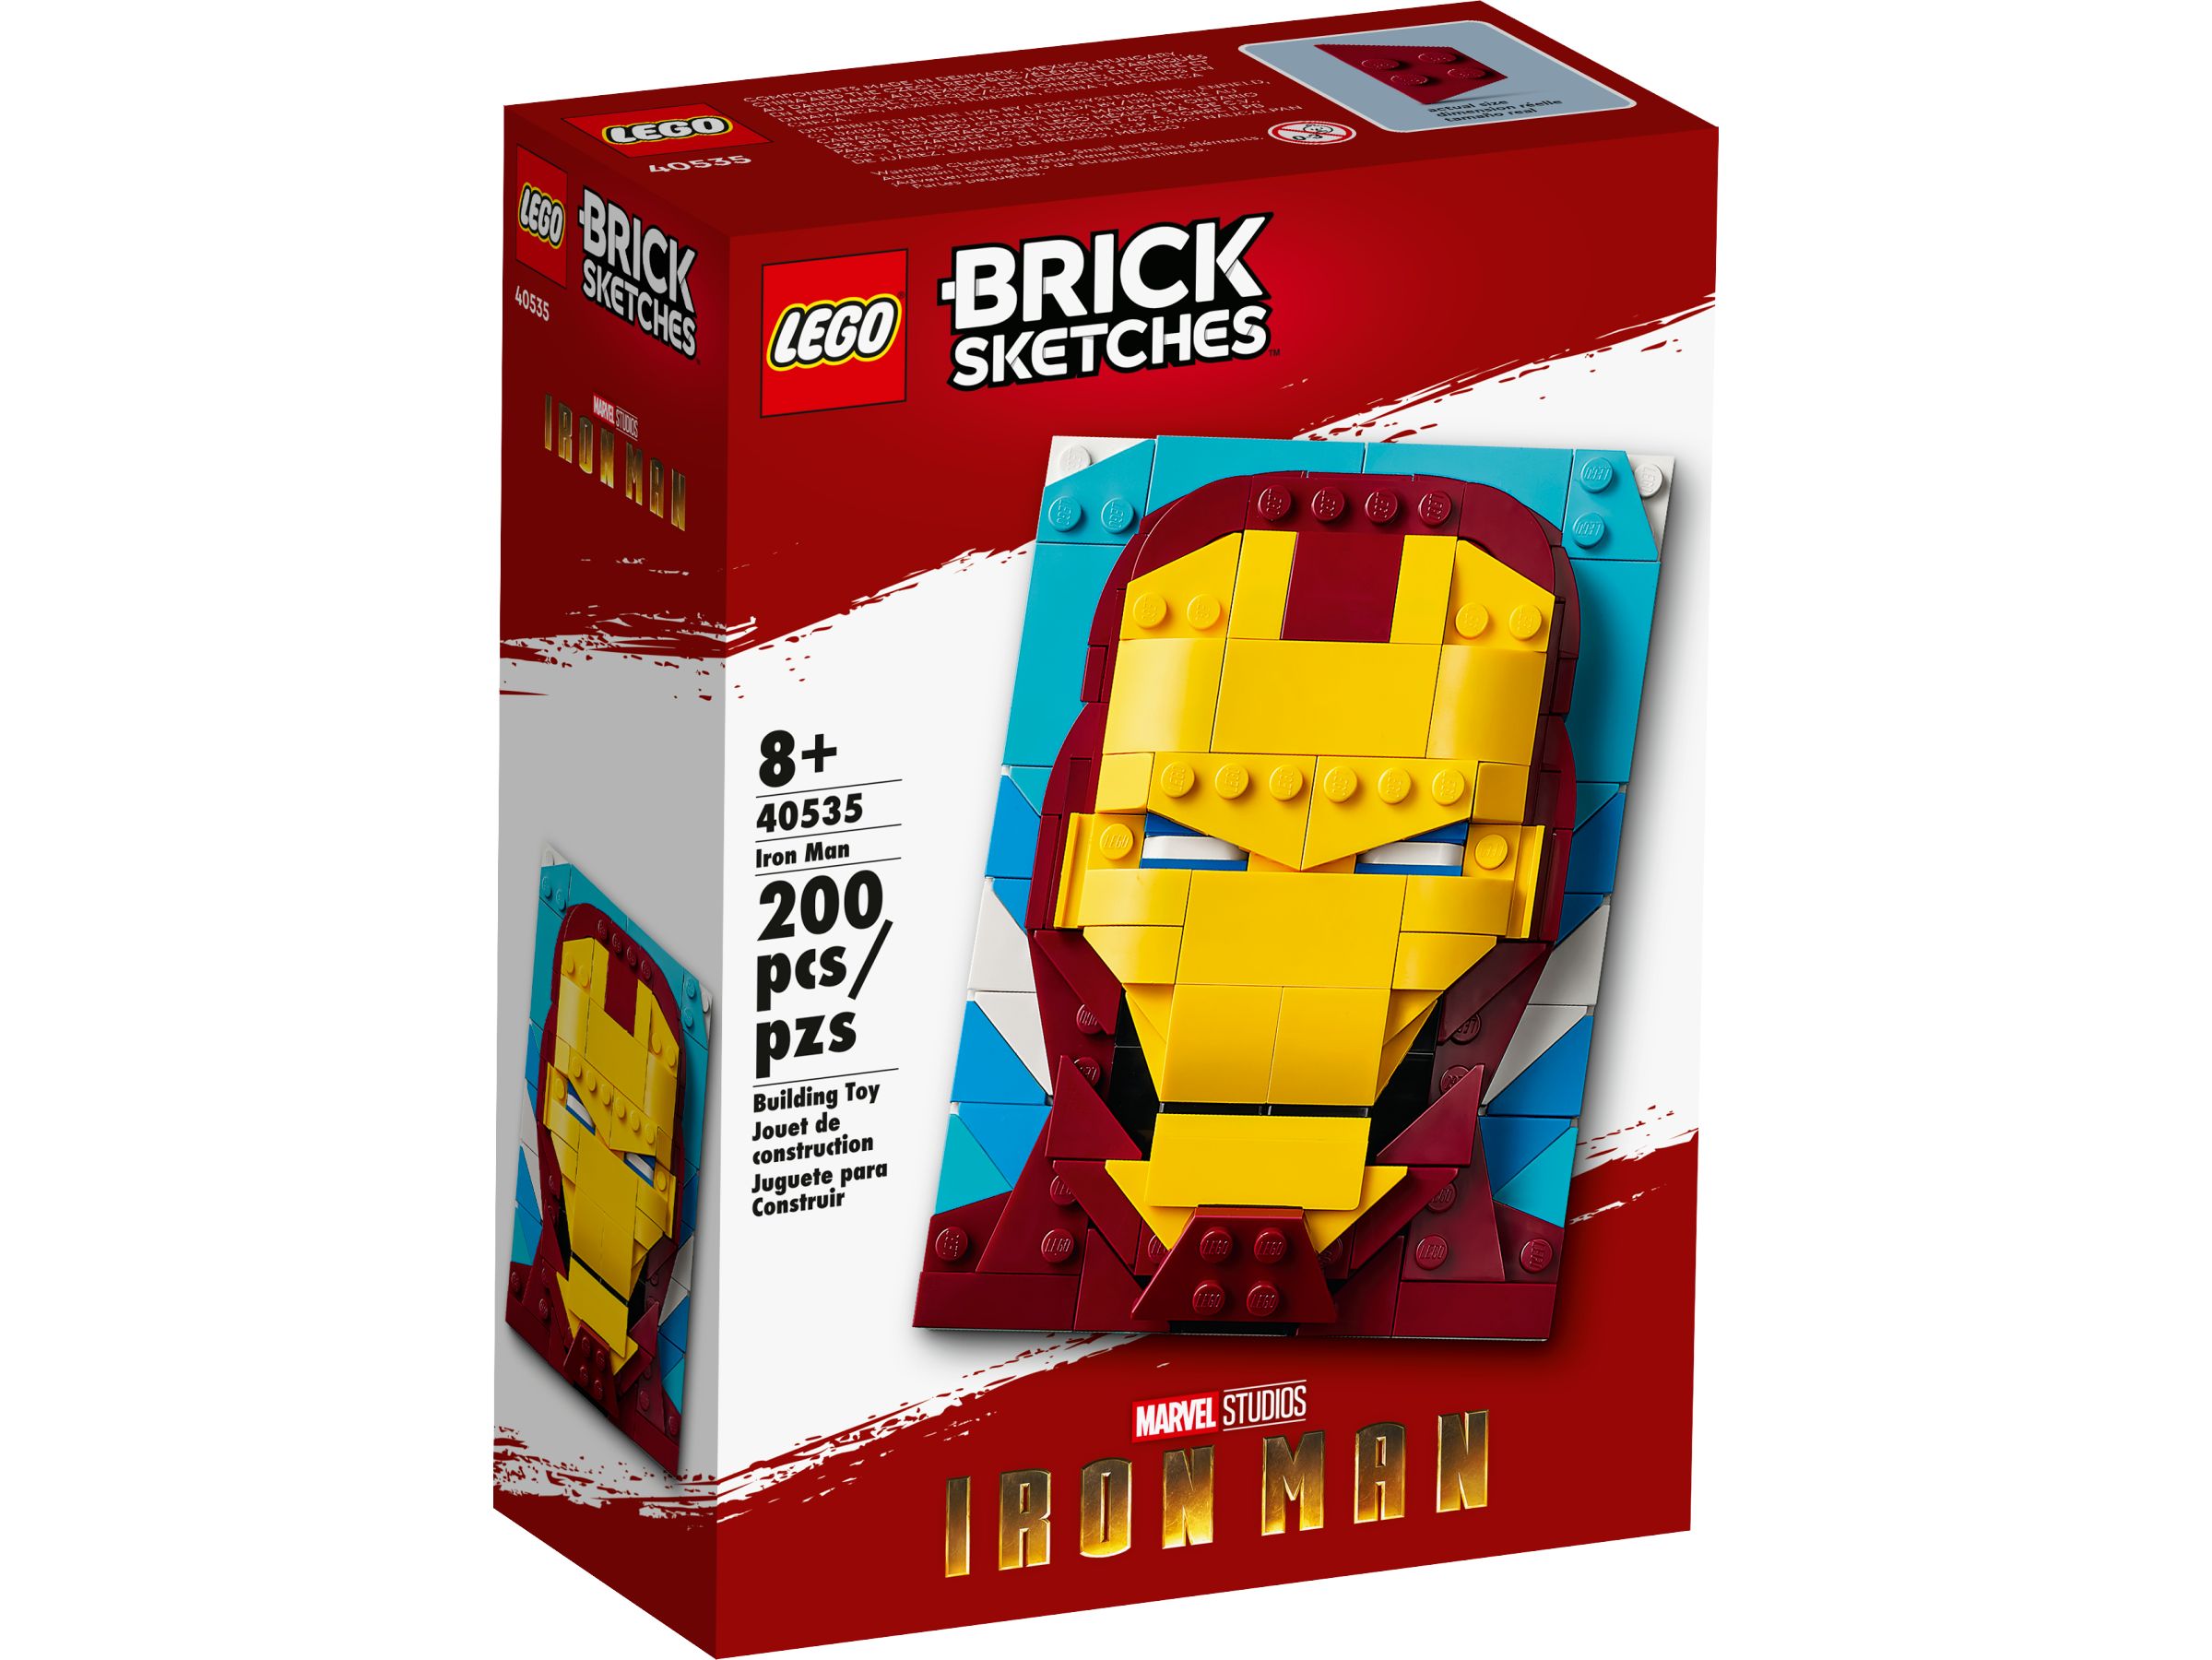 LEGO Brick Sketches 40535 Iron Man LEGO_40535_alt1.jpg